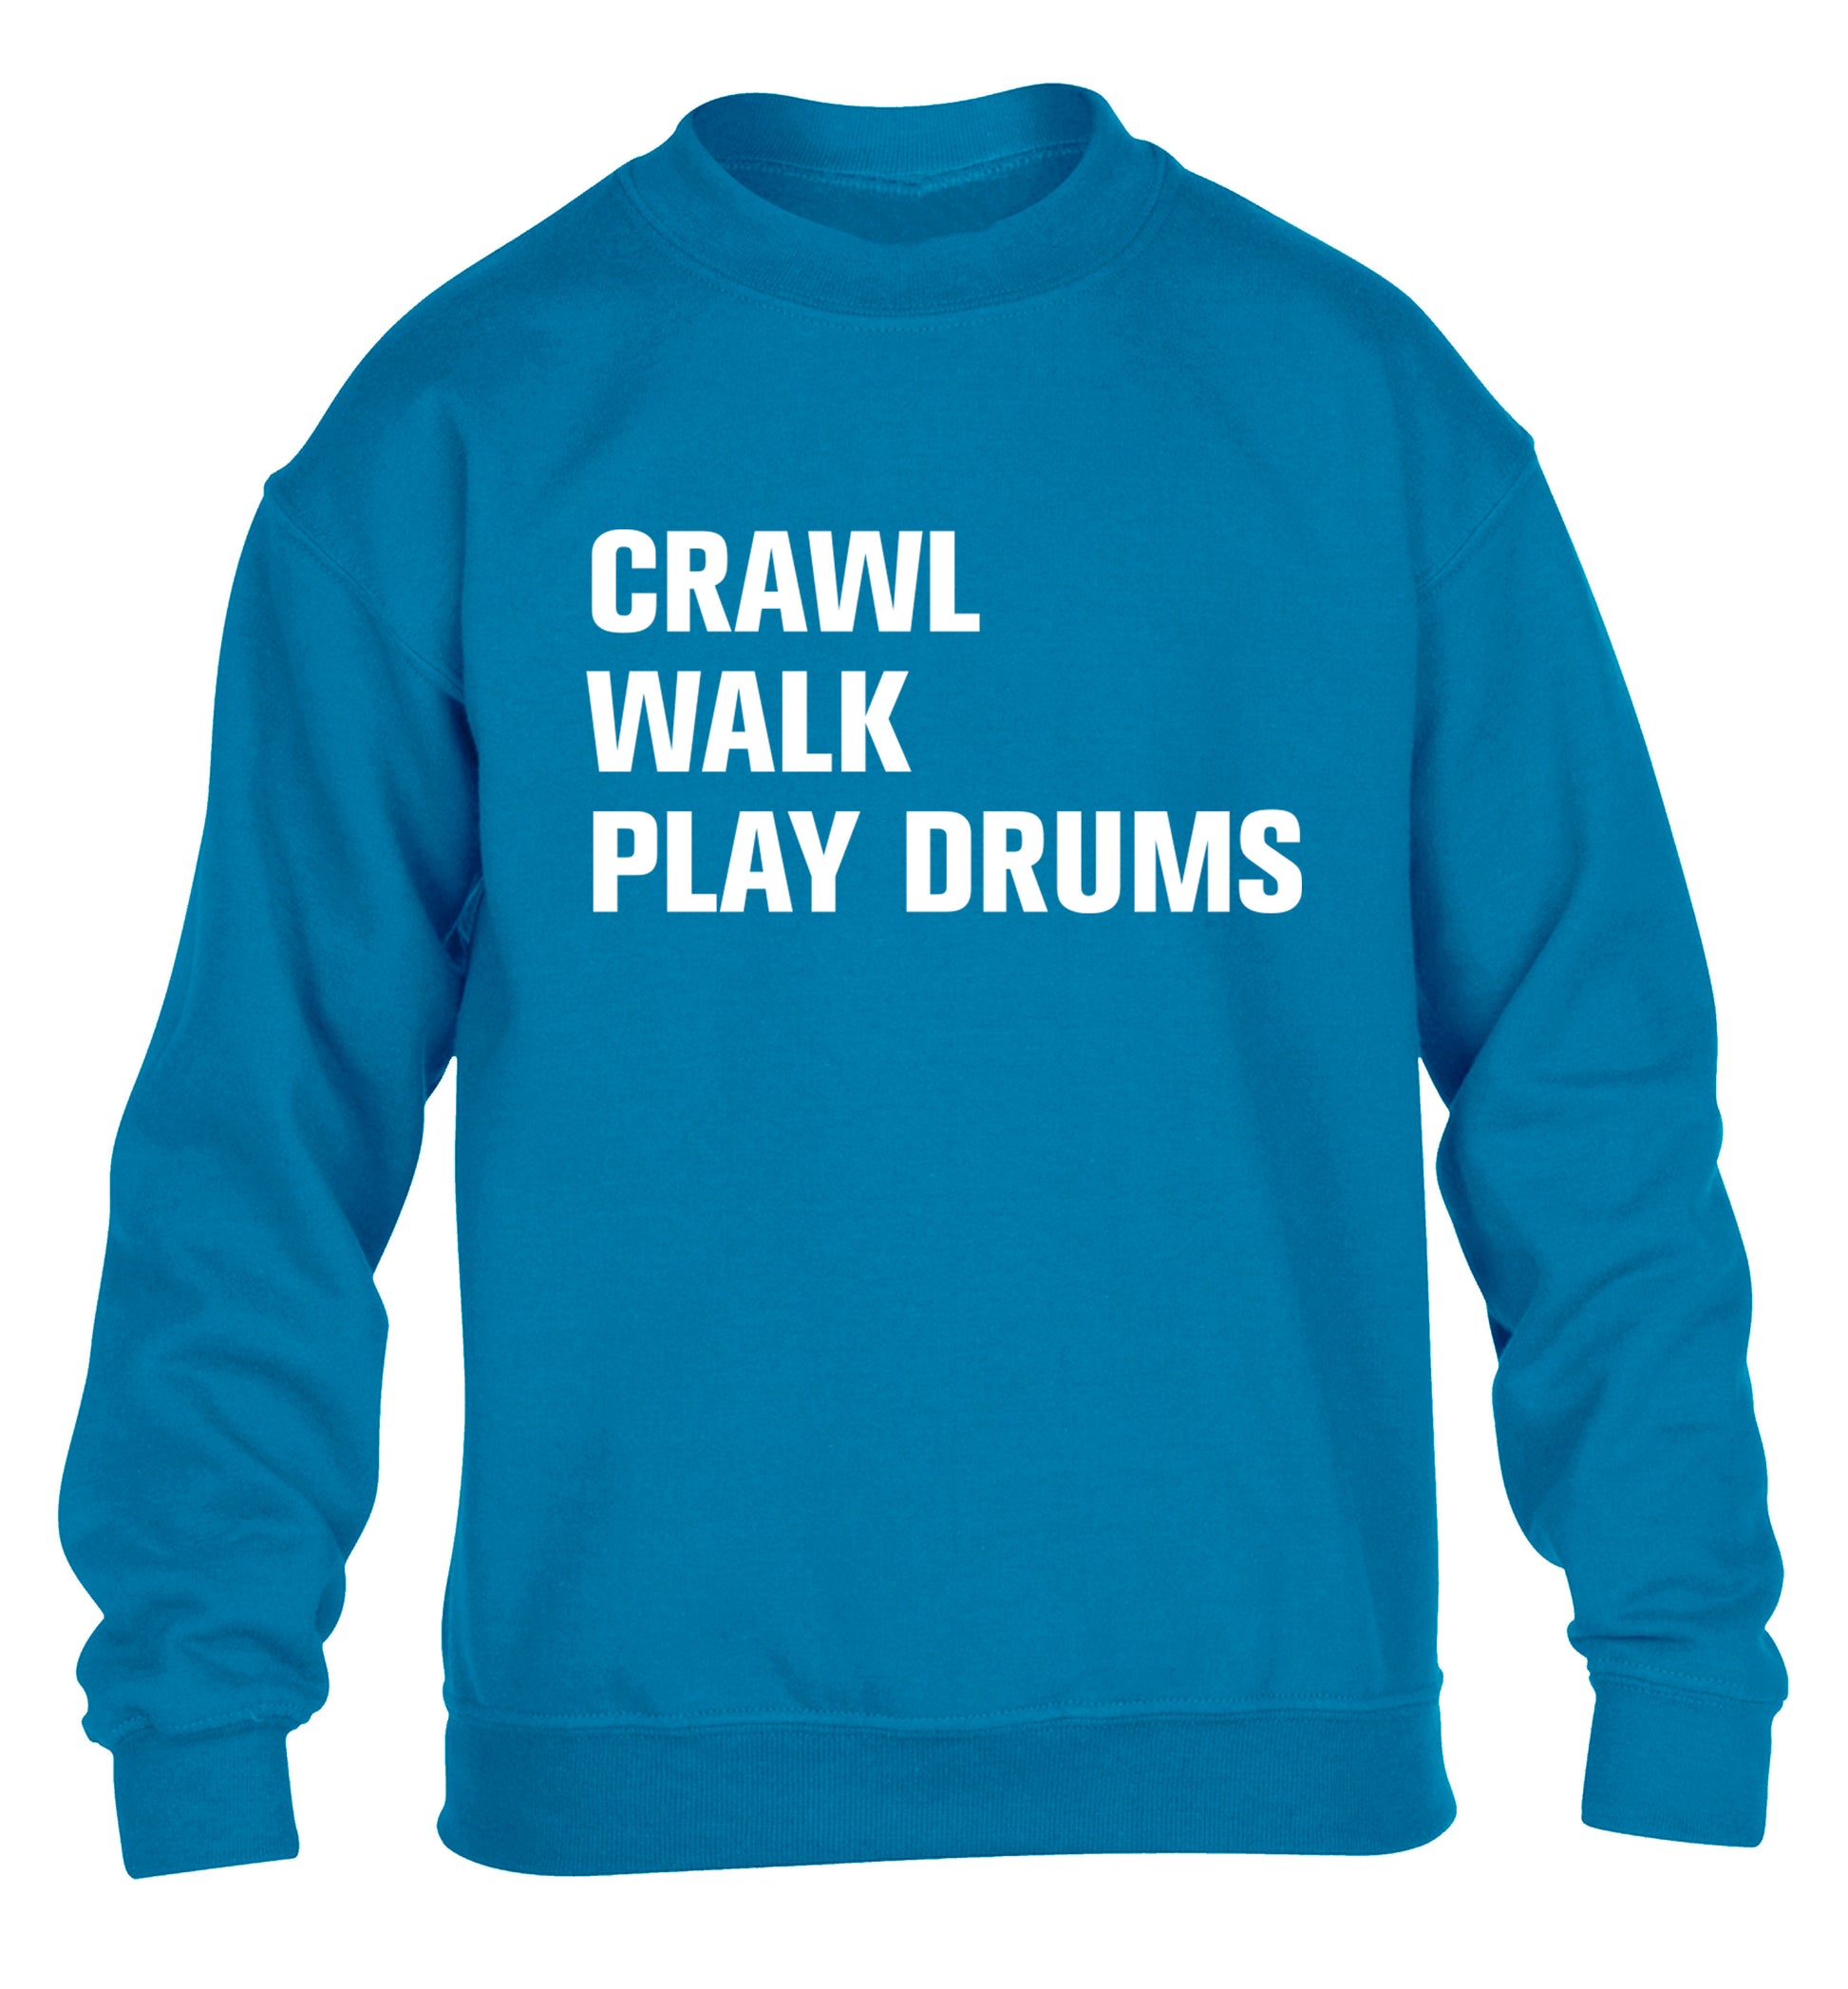 Crawl walk play drums children's blue sweater 12-13 Years